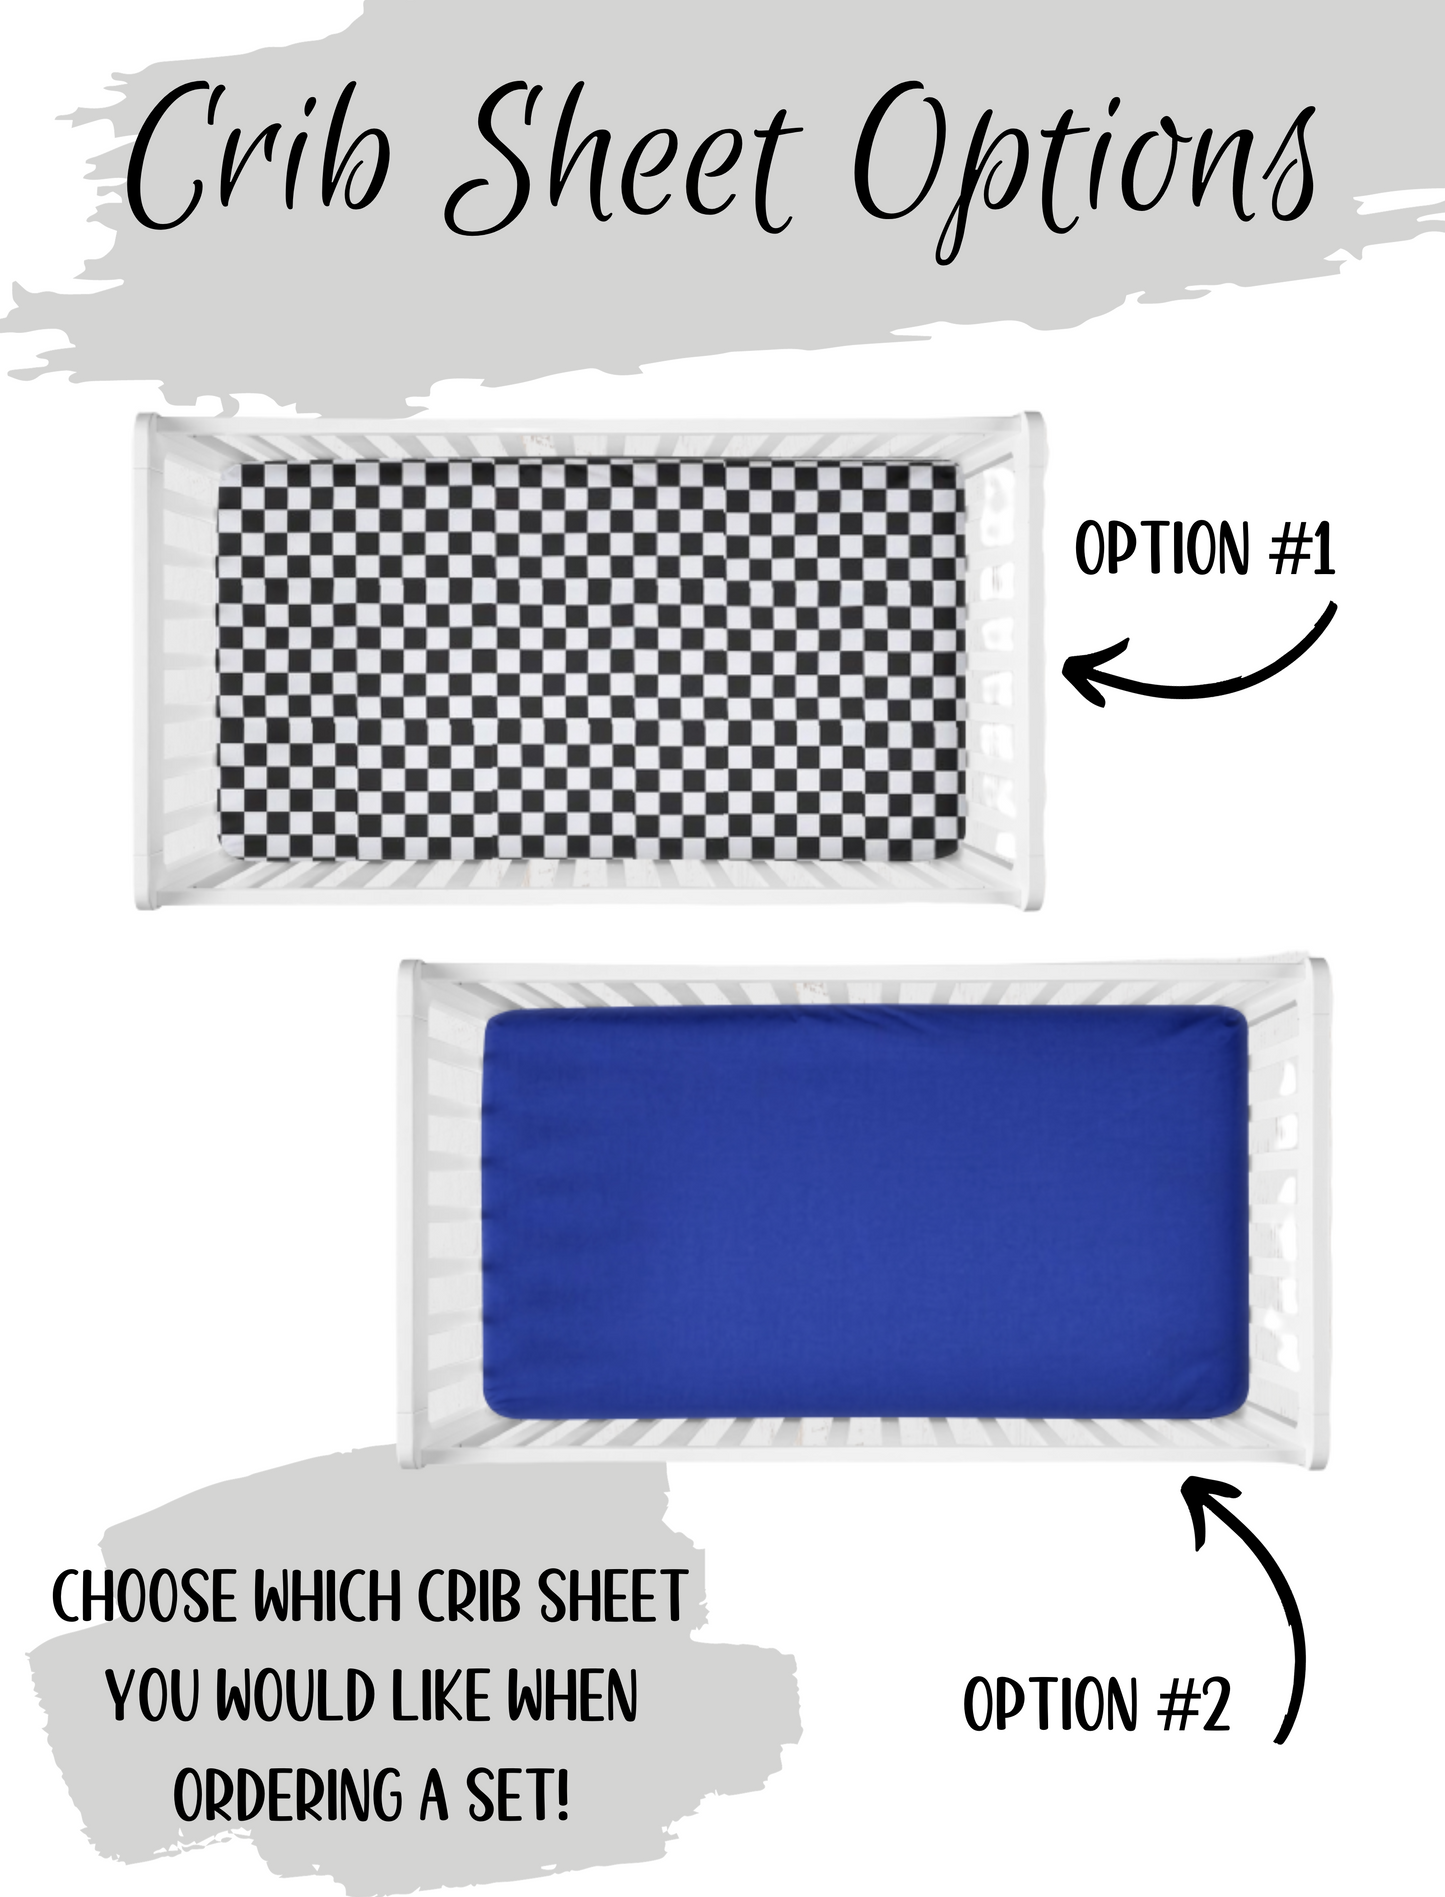 you pick your crib sheet - racing check & blue